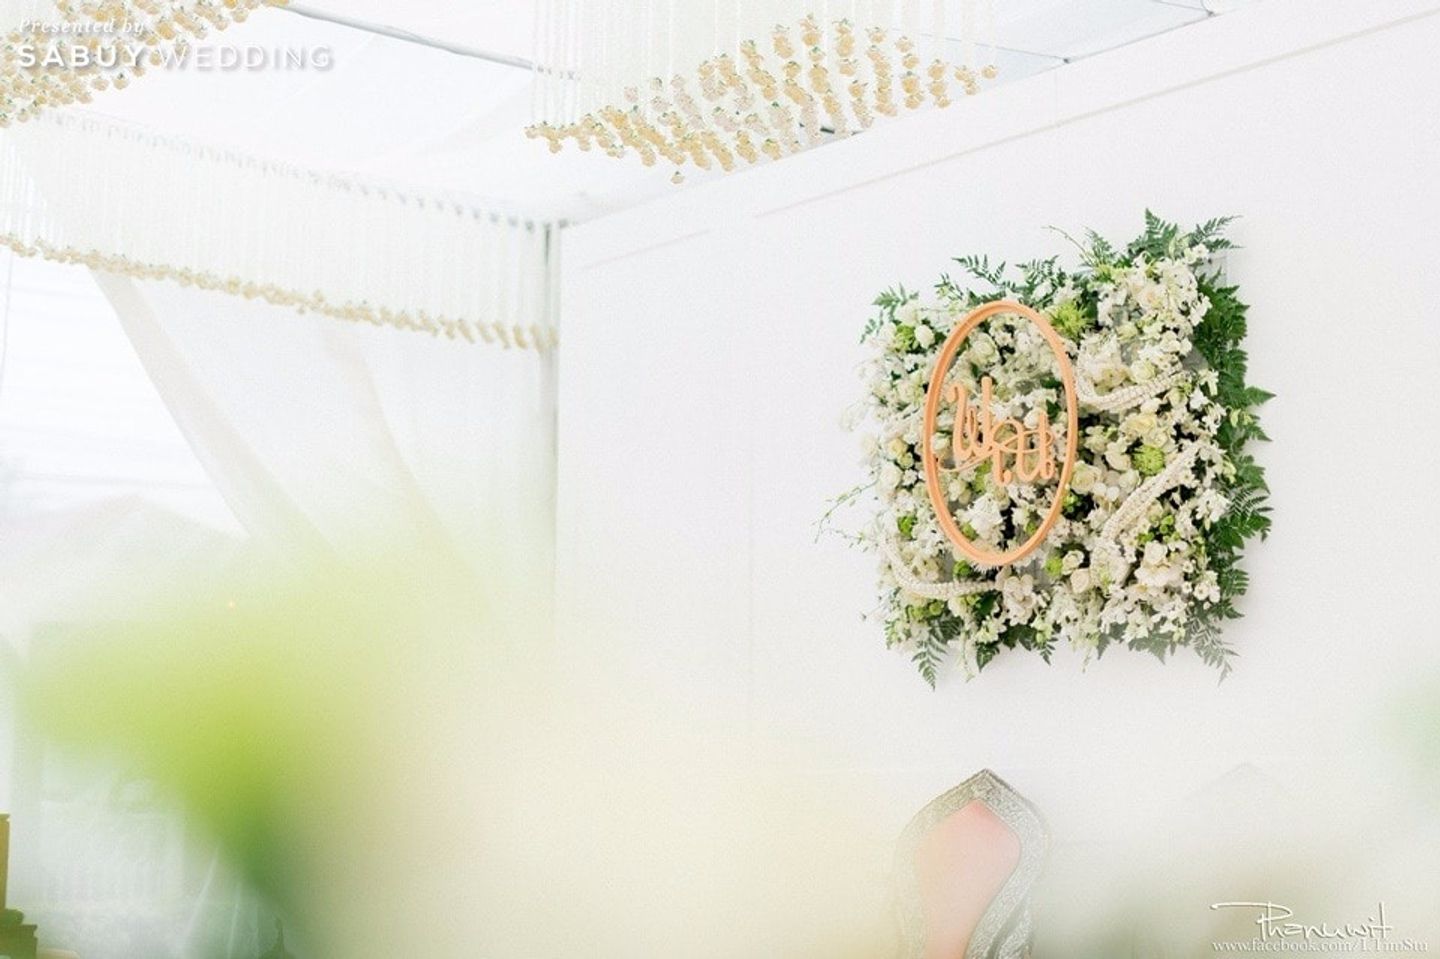 backdrop งานแต่ง,ตกแต่งงานแต่ง,จัดดอกไม้งานแต่ง รีวิวงานแต่ง หมั้นไทยในบ้านแบบจัดเต็ม สวยเน้นๆ ทำเองได้ทุกขั้นตอน